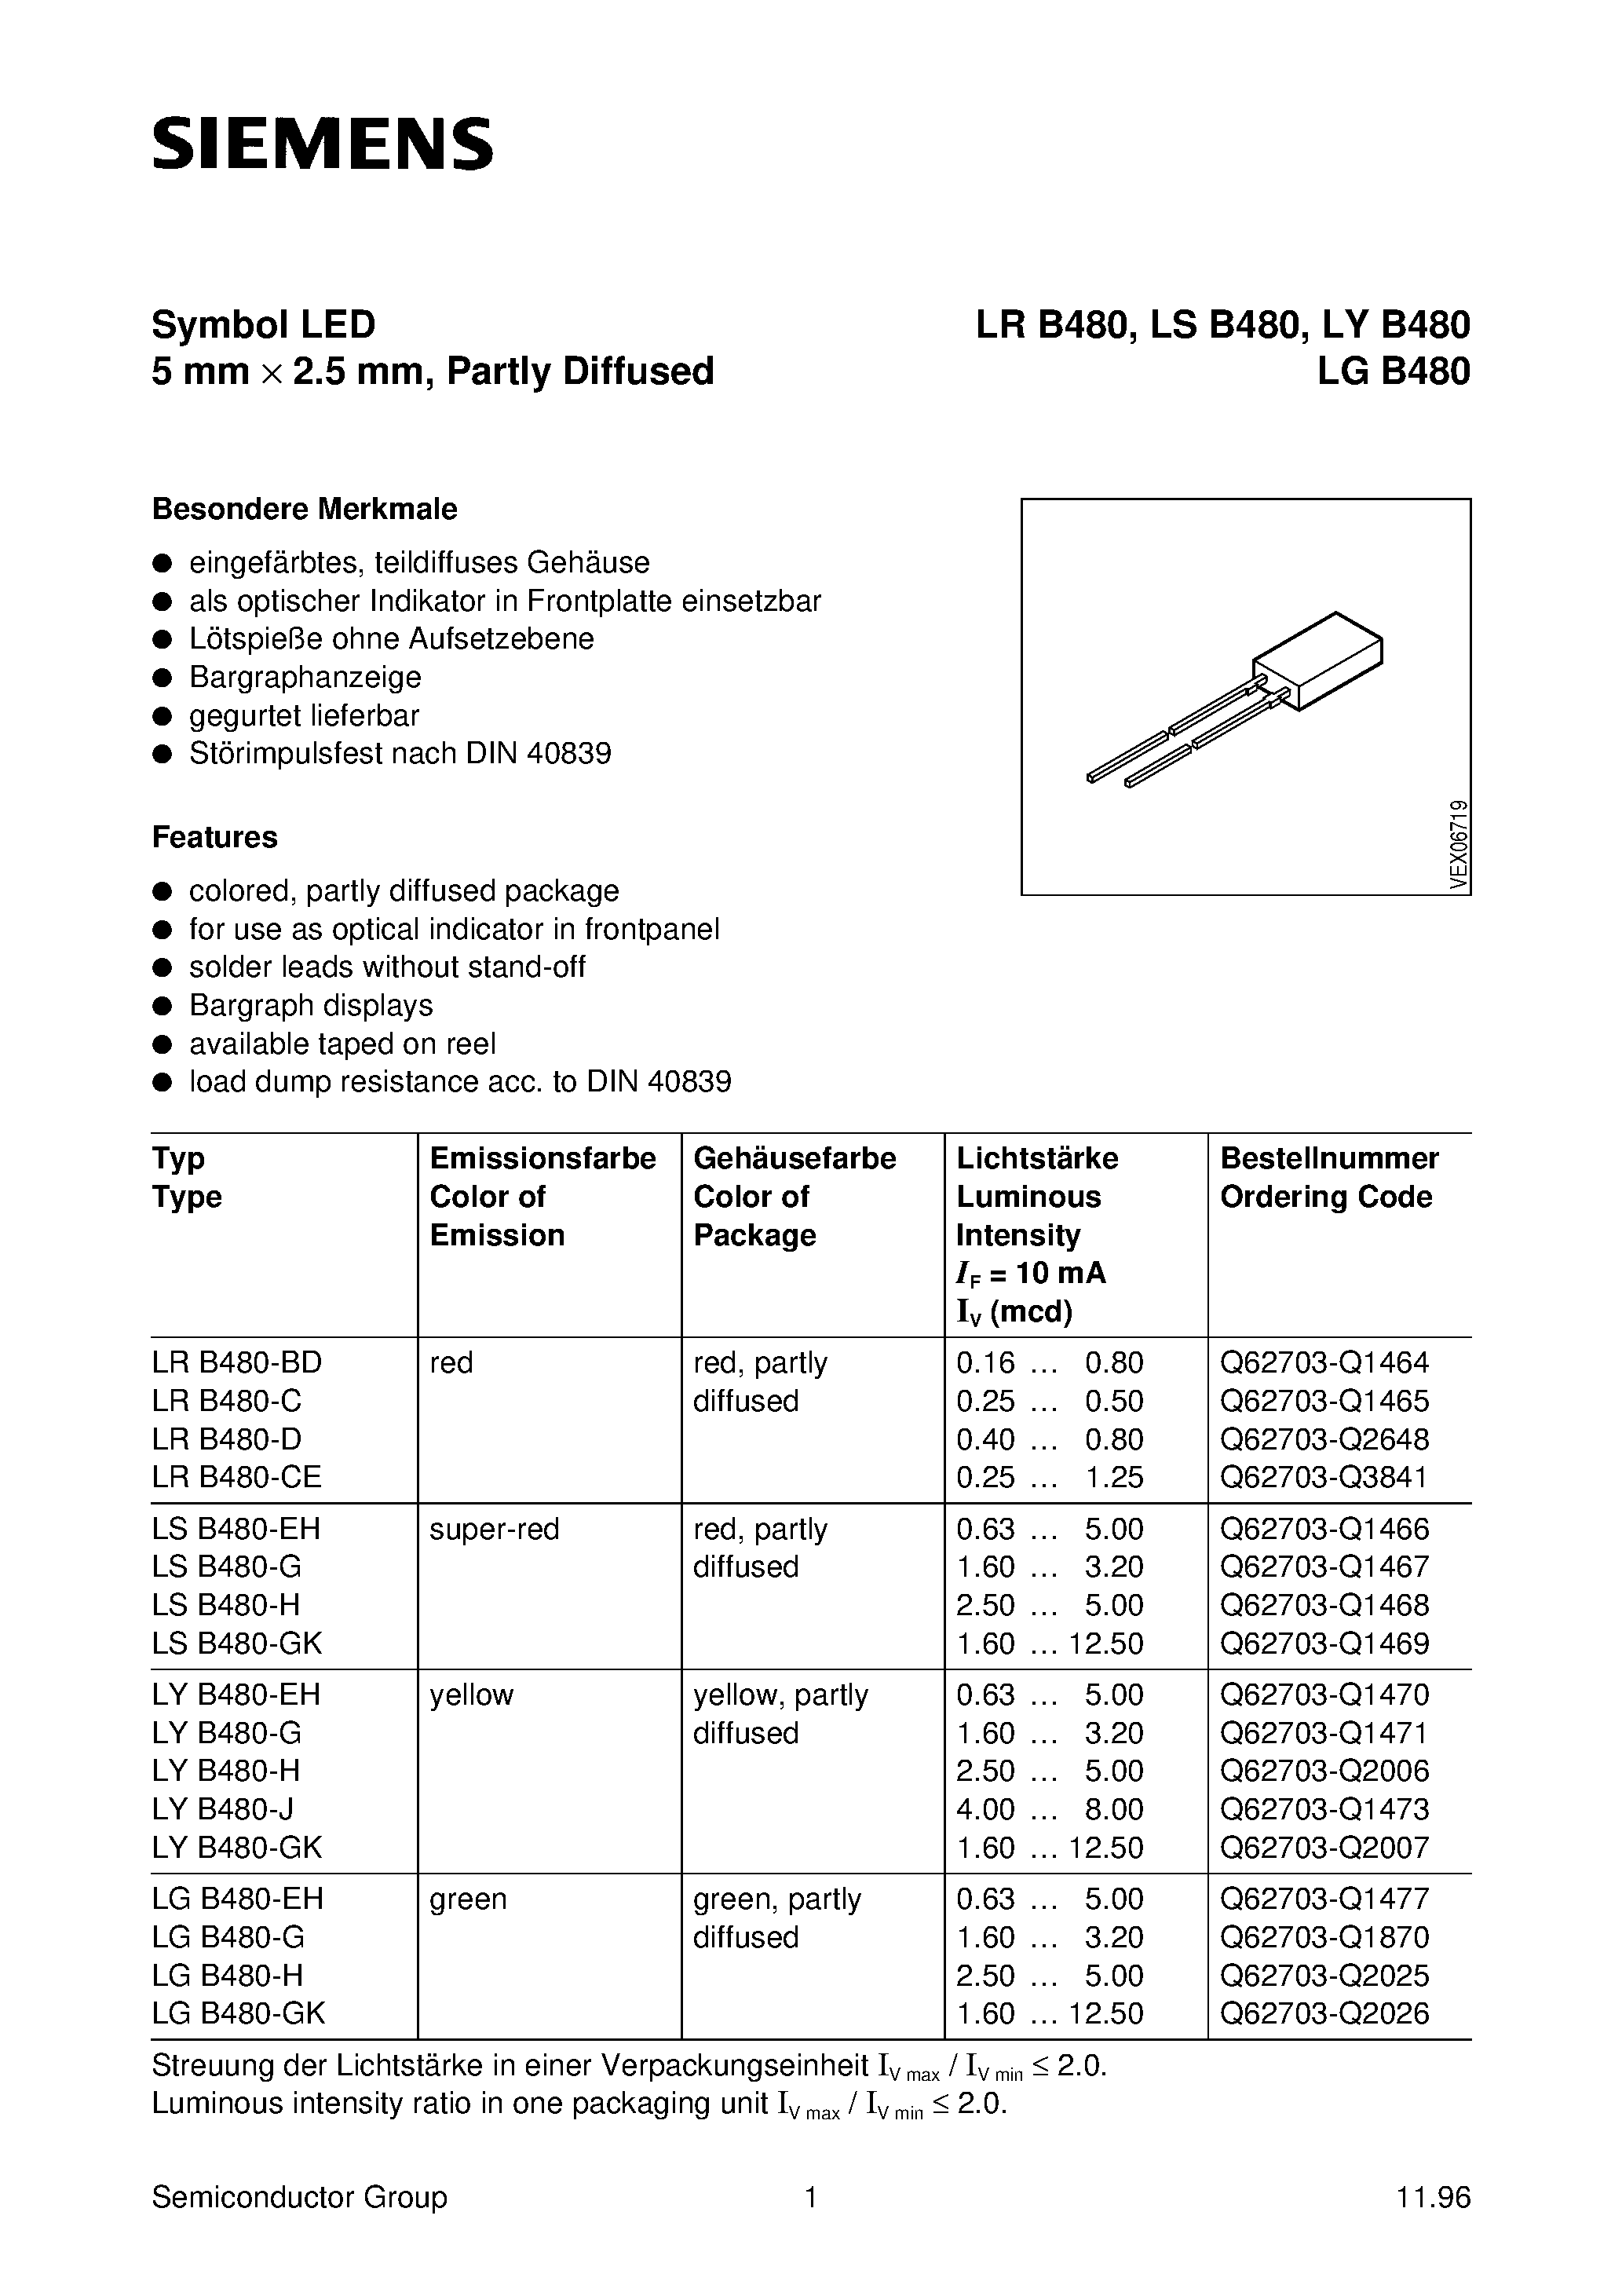 Datasheet LYB480-J - Symbol LED 5 mm x 2.5 mm/ Partly Diffused page 1